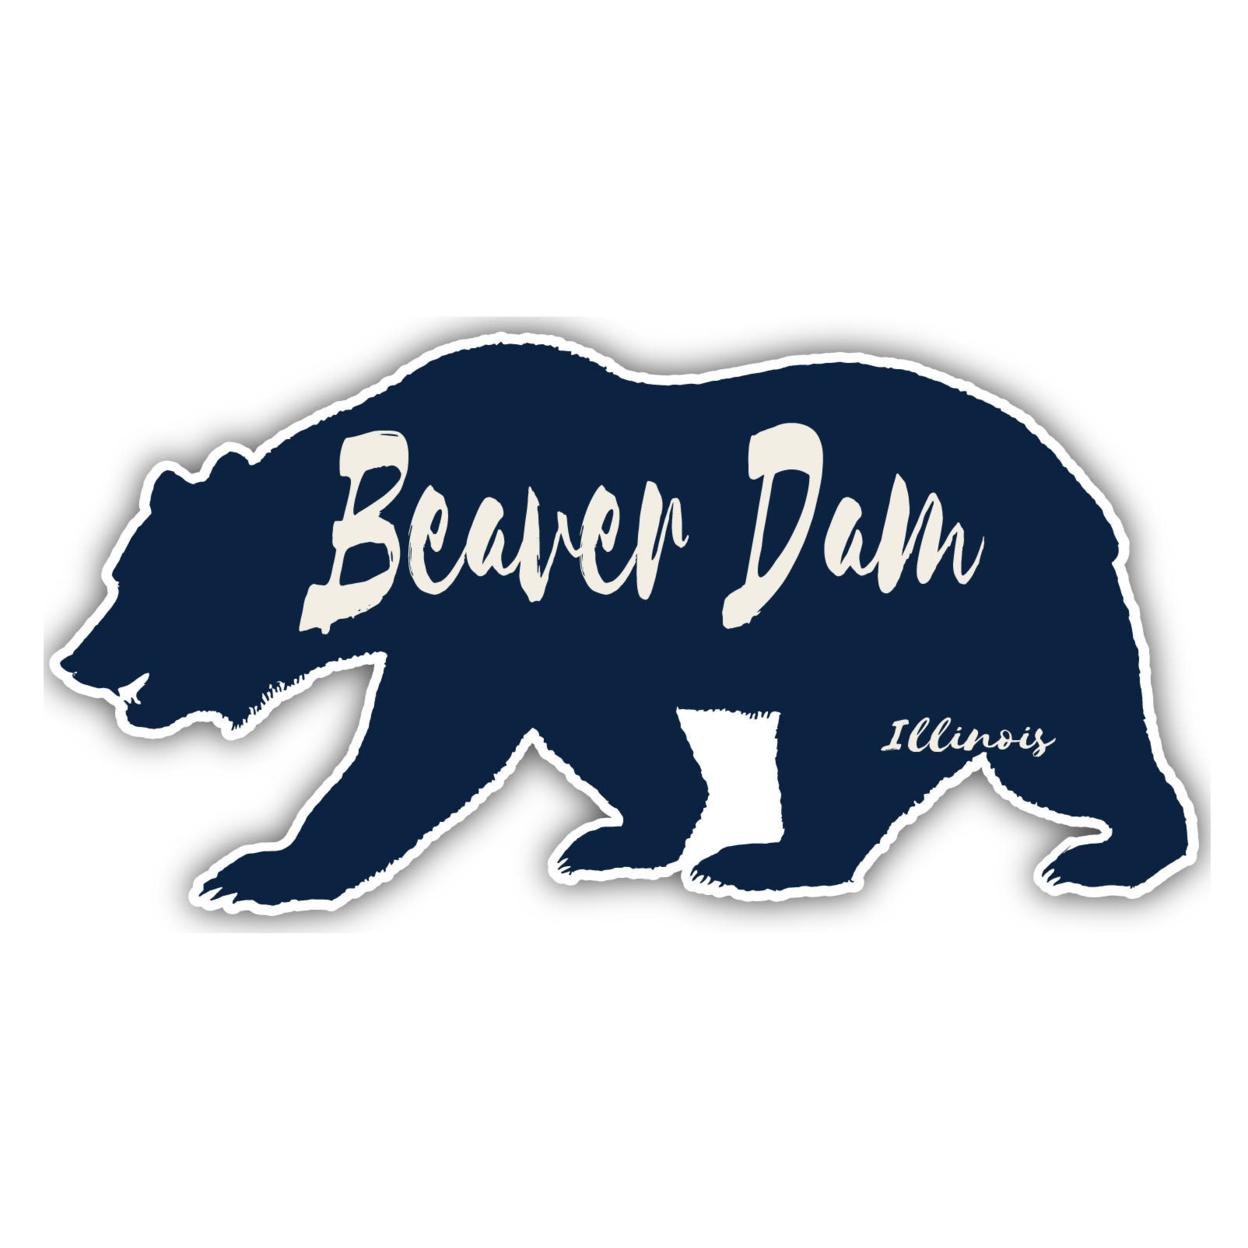 Beaver Dam Illinois Souvenir Decorative Stickers (Choose Theme And Size) - 4-Pack, 4-Inch, Bear